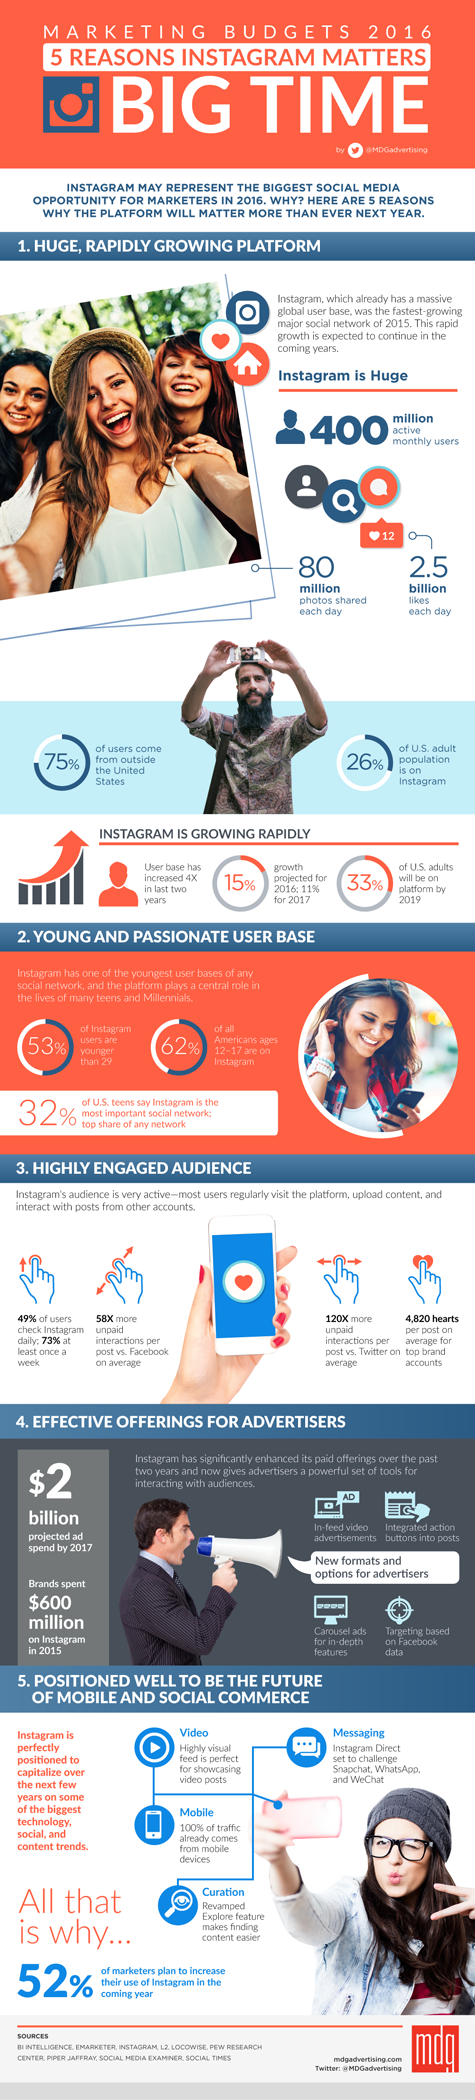 instagram marketing budgets 2016 infographic 475